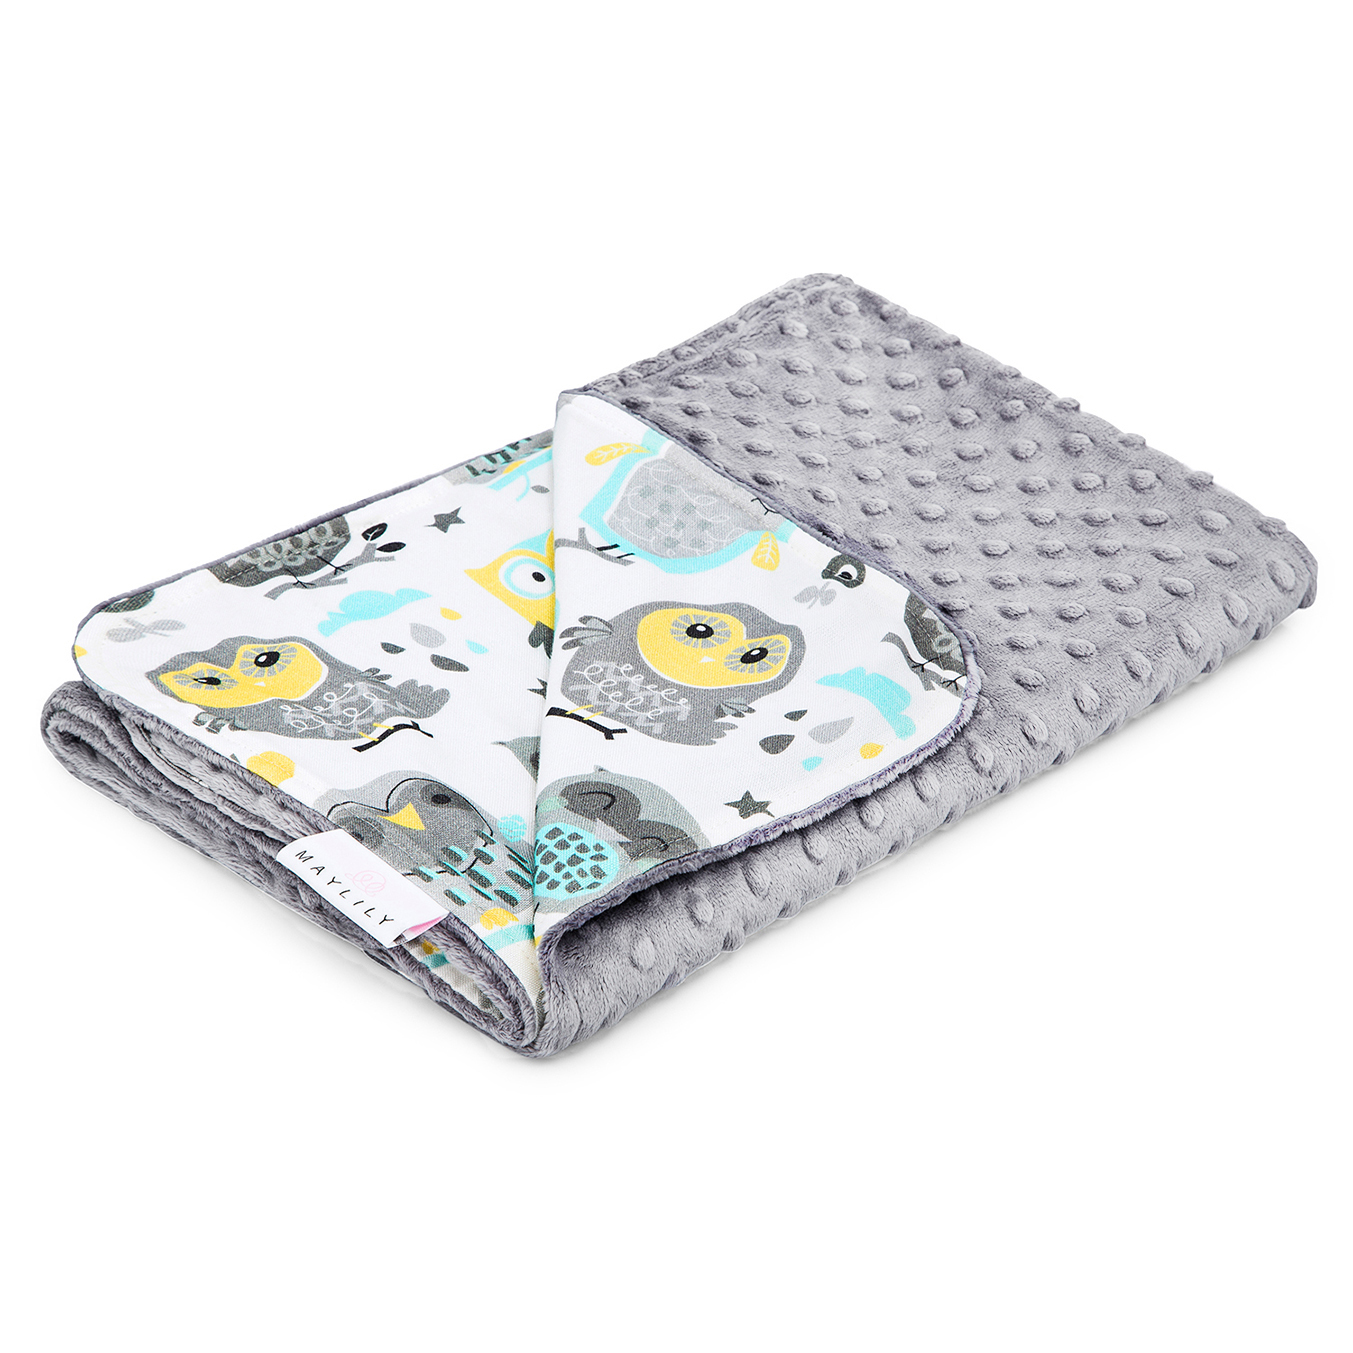 Light bamboo blanket - Grey owls - silver